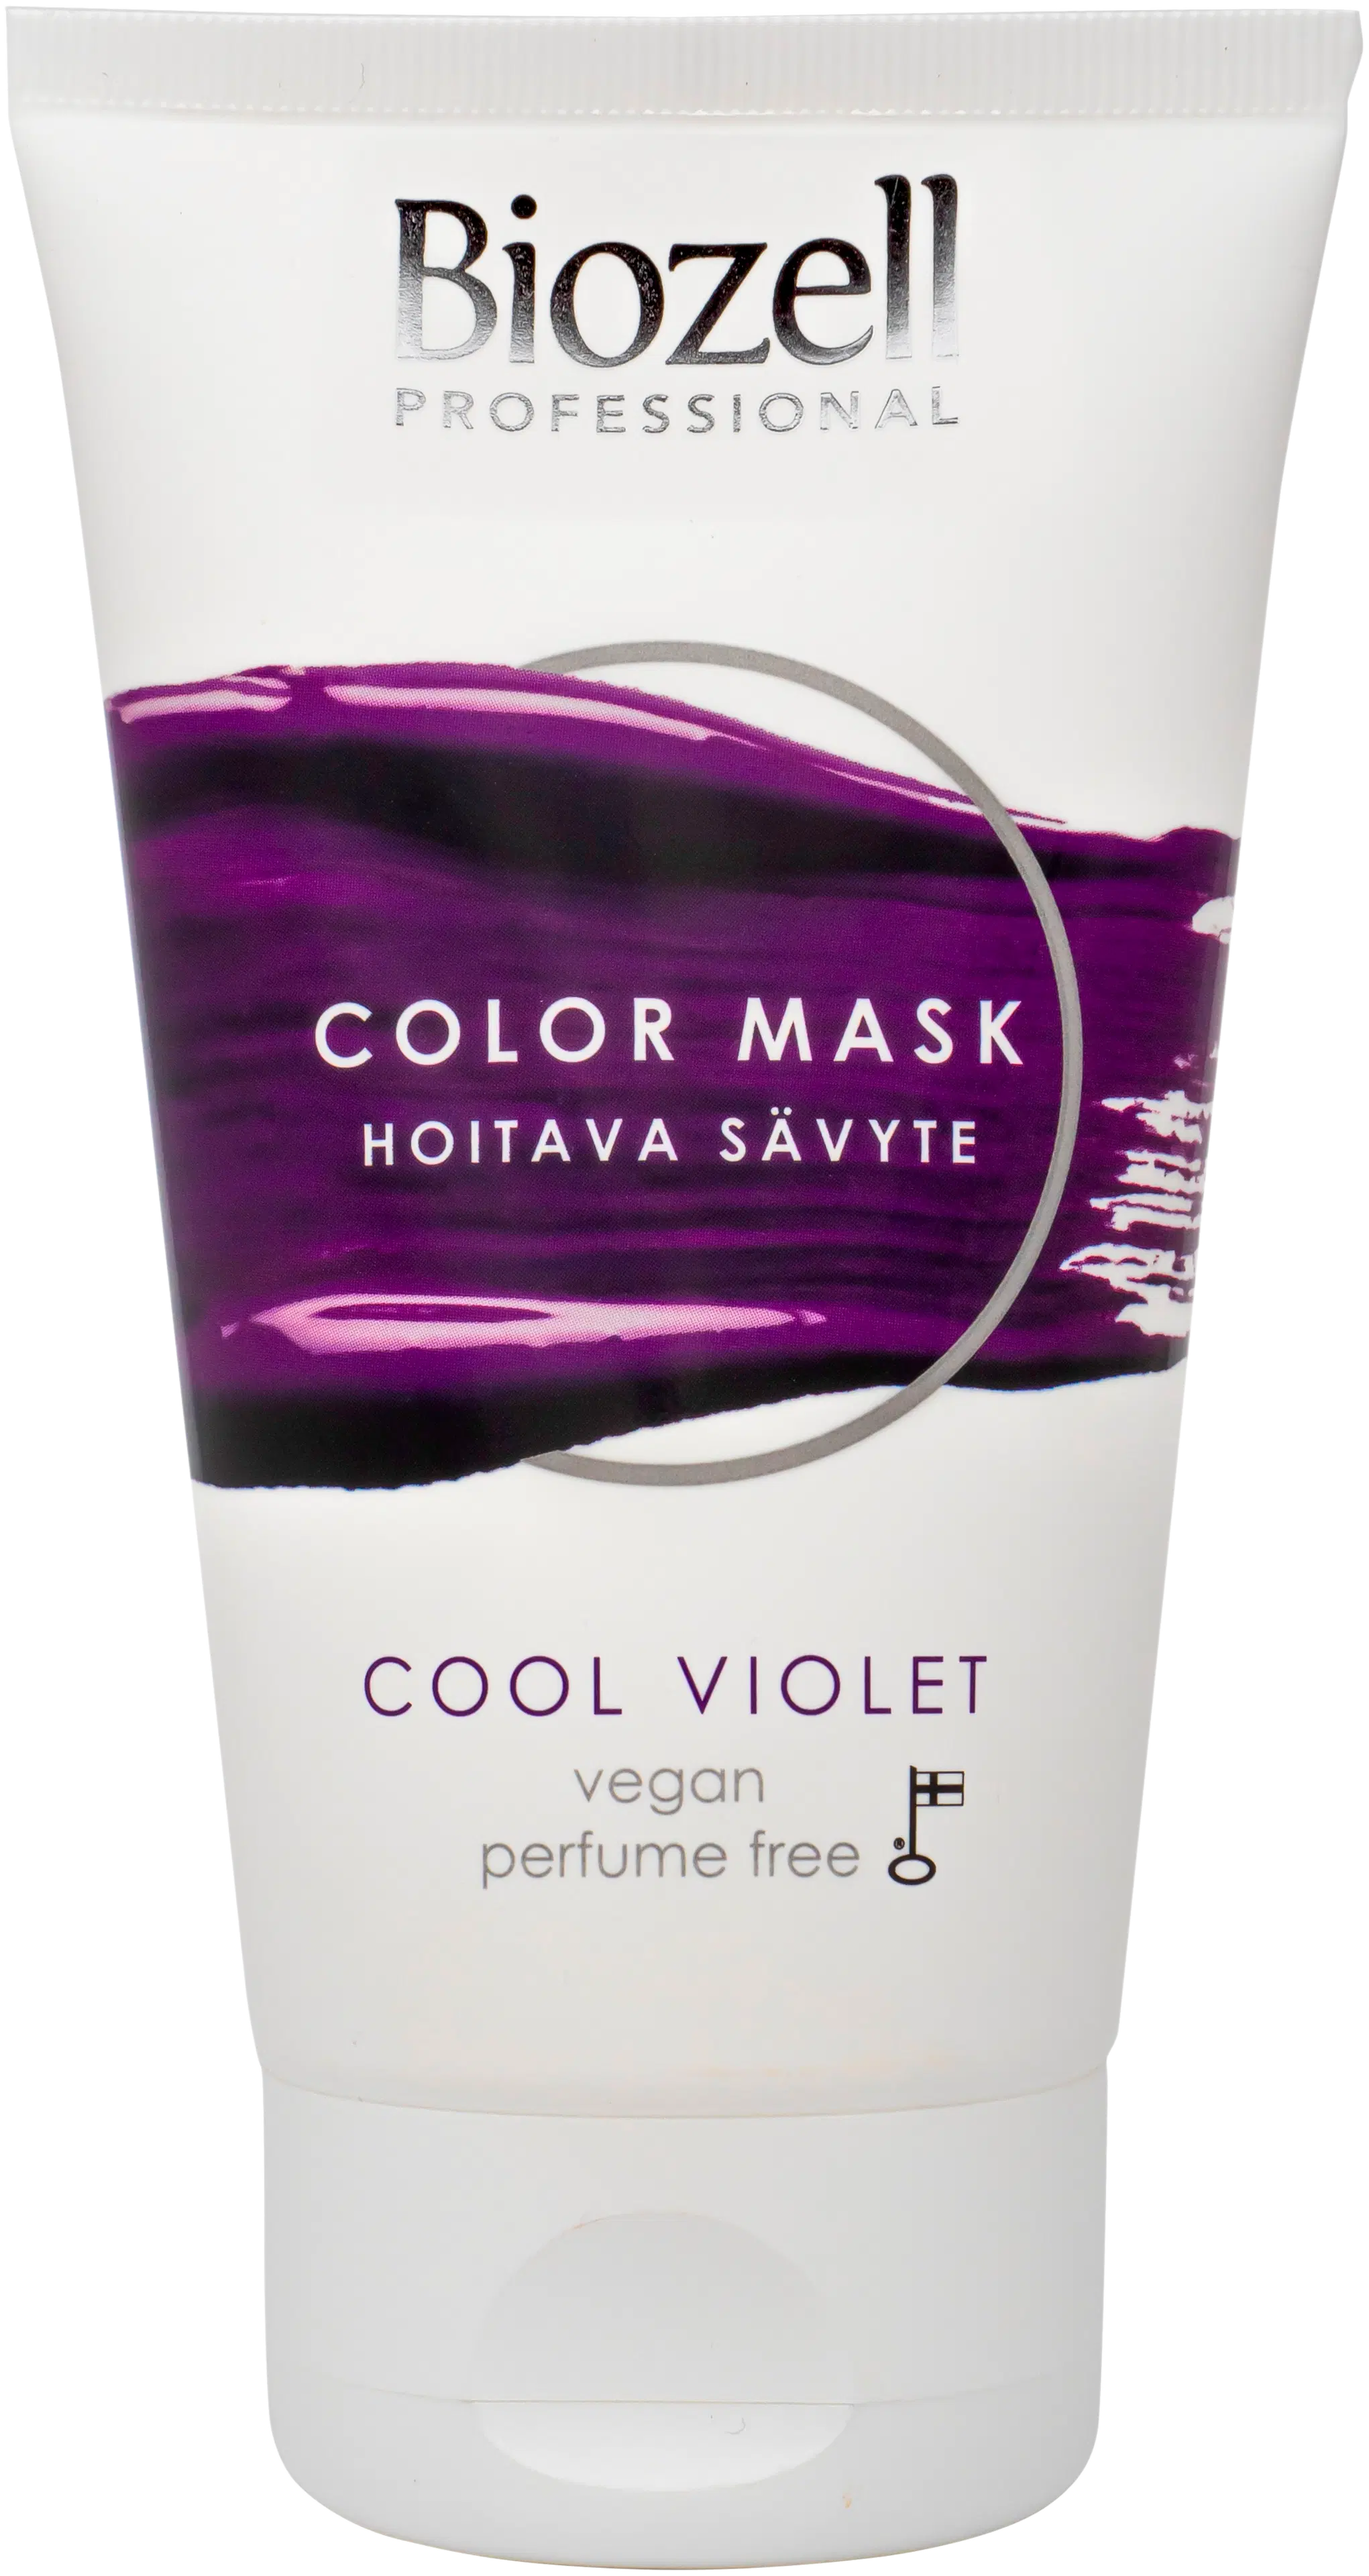 Biozell Professional Color Mask Hoitava sävyte Cool Violet 150ml